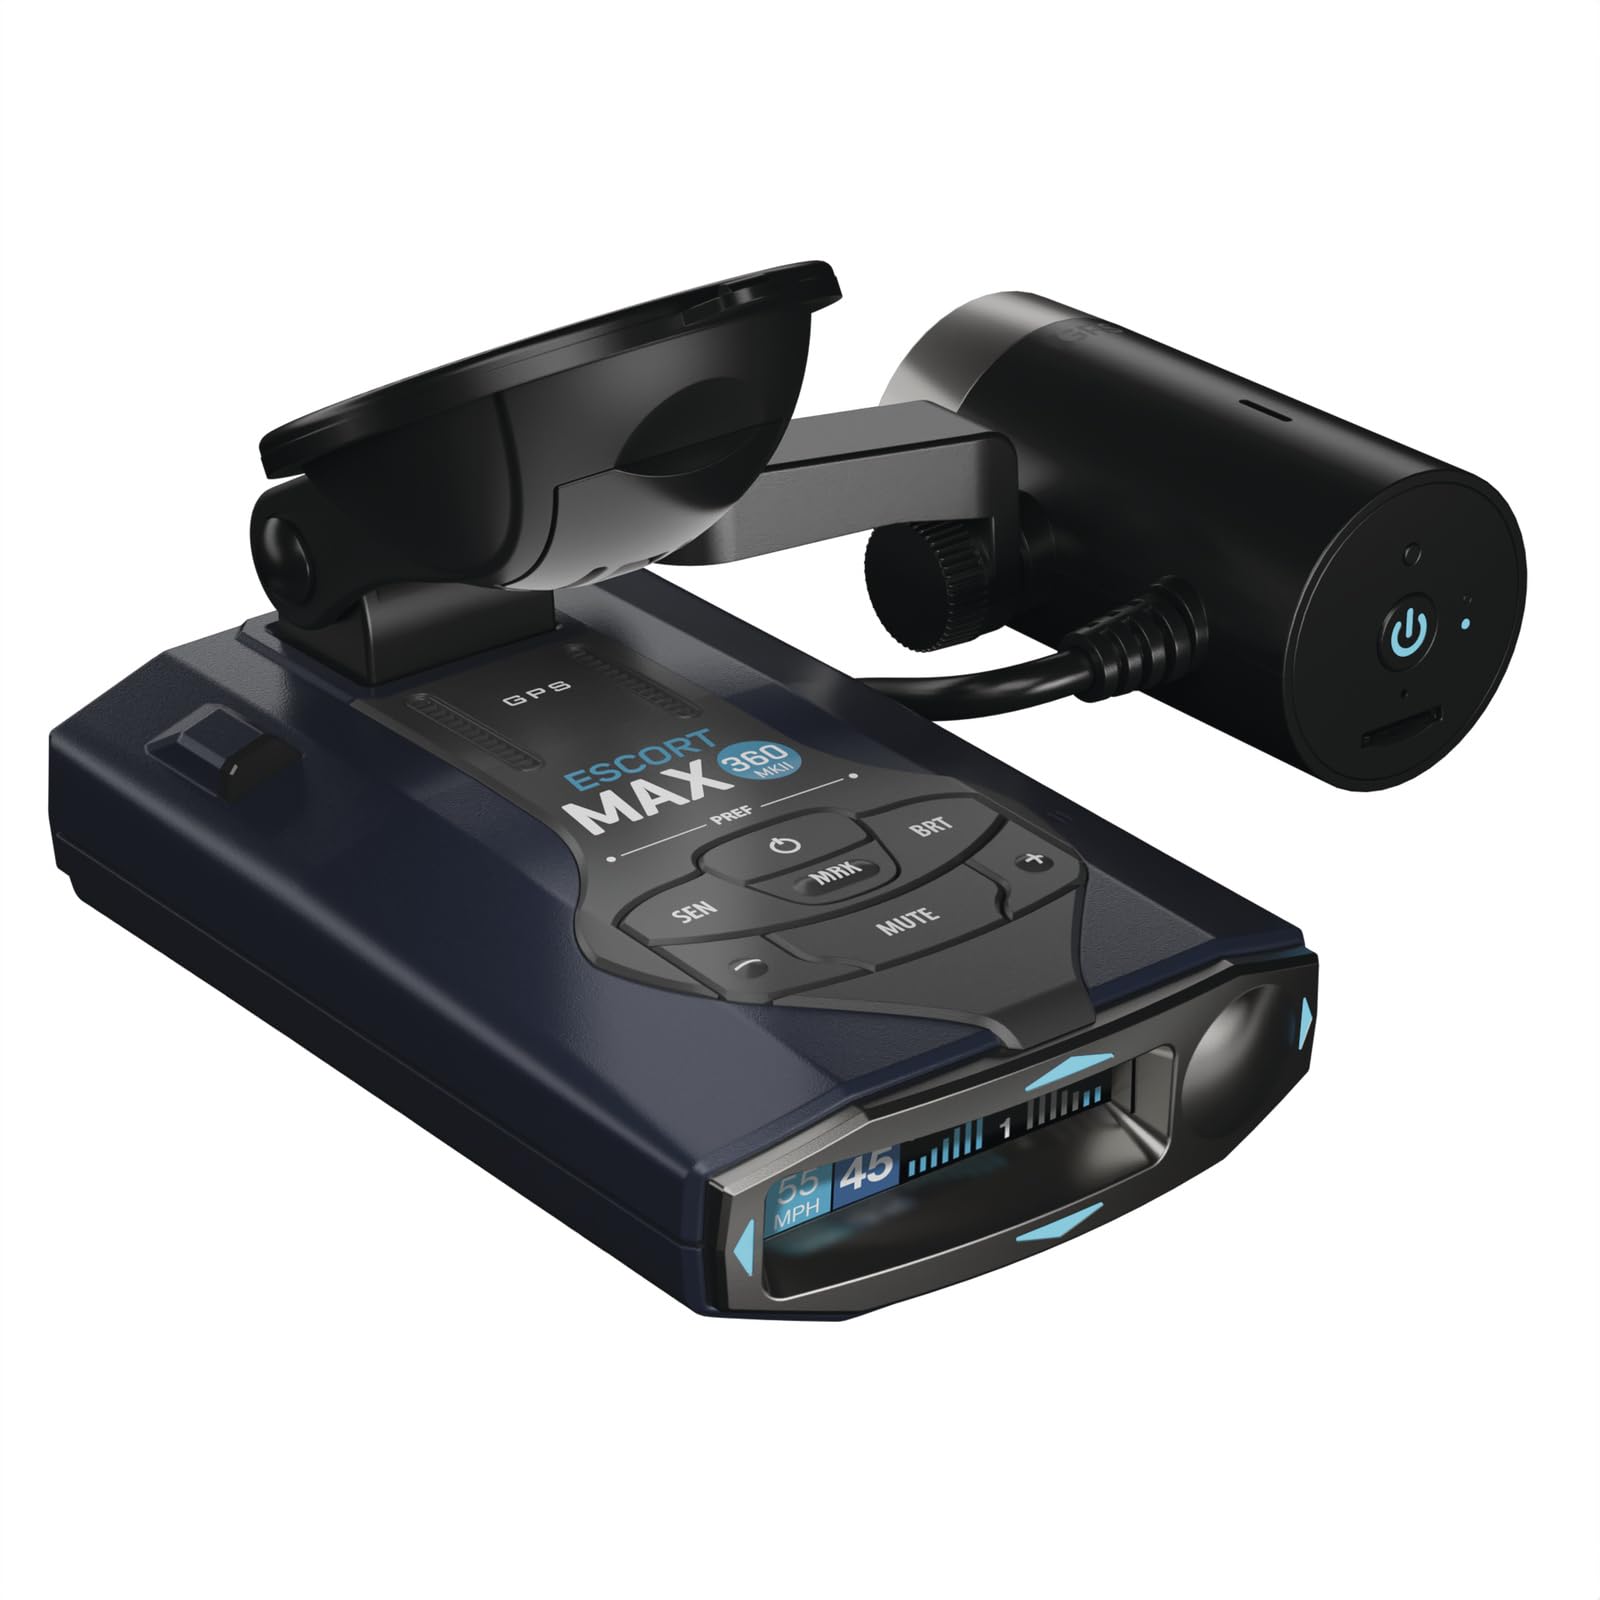 Escort MAX 360 MKII Radar and Laser Detector & Escort M2 Smart Dash Cam Bundle - 1080P Full HD Video, Extreme Range, False-Alert Filtering, Built-in WiFi, GPS Based and Drive Smarter App, 0100058-1